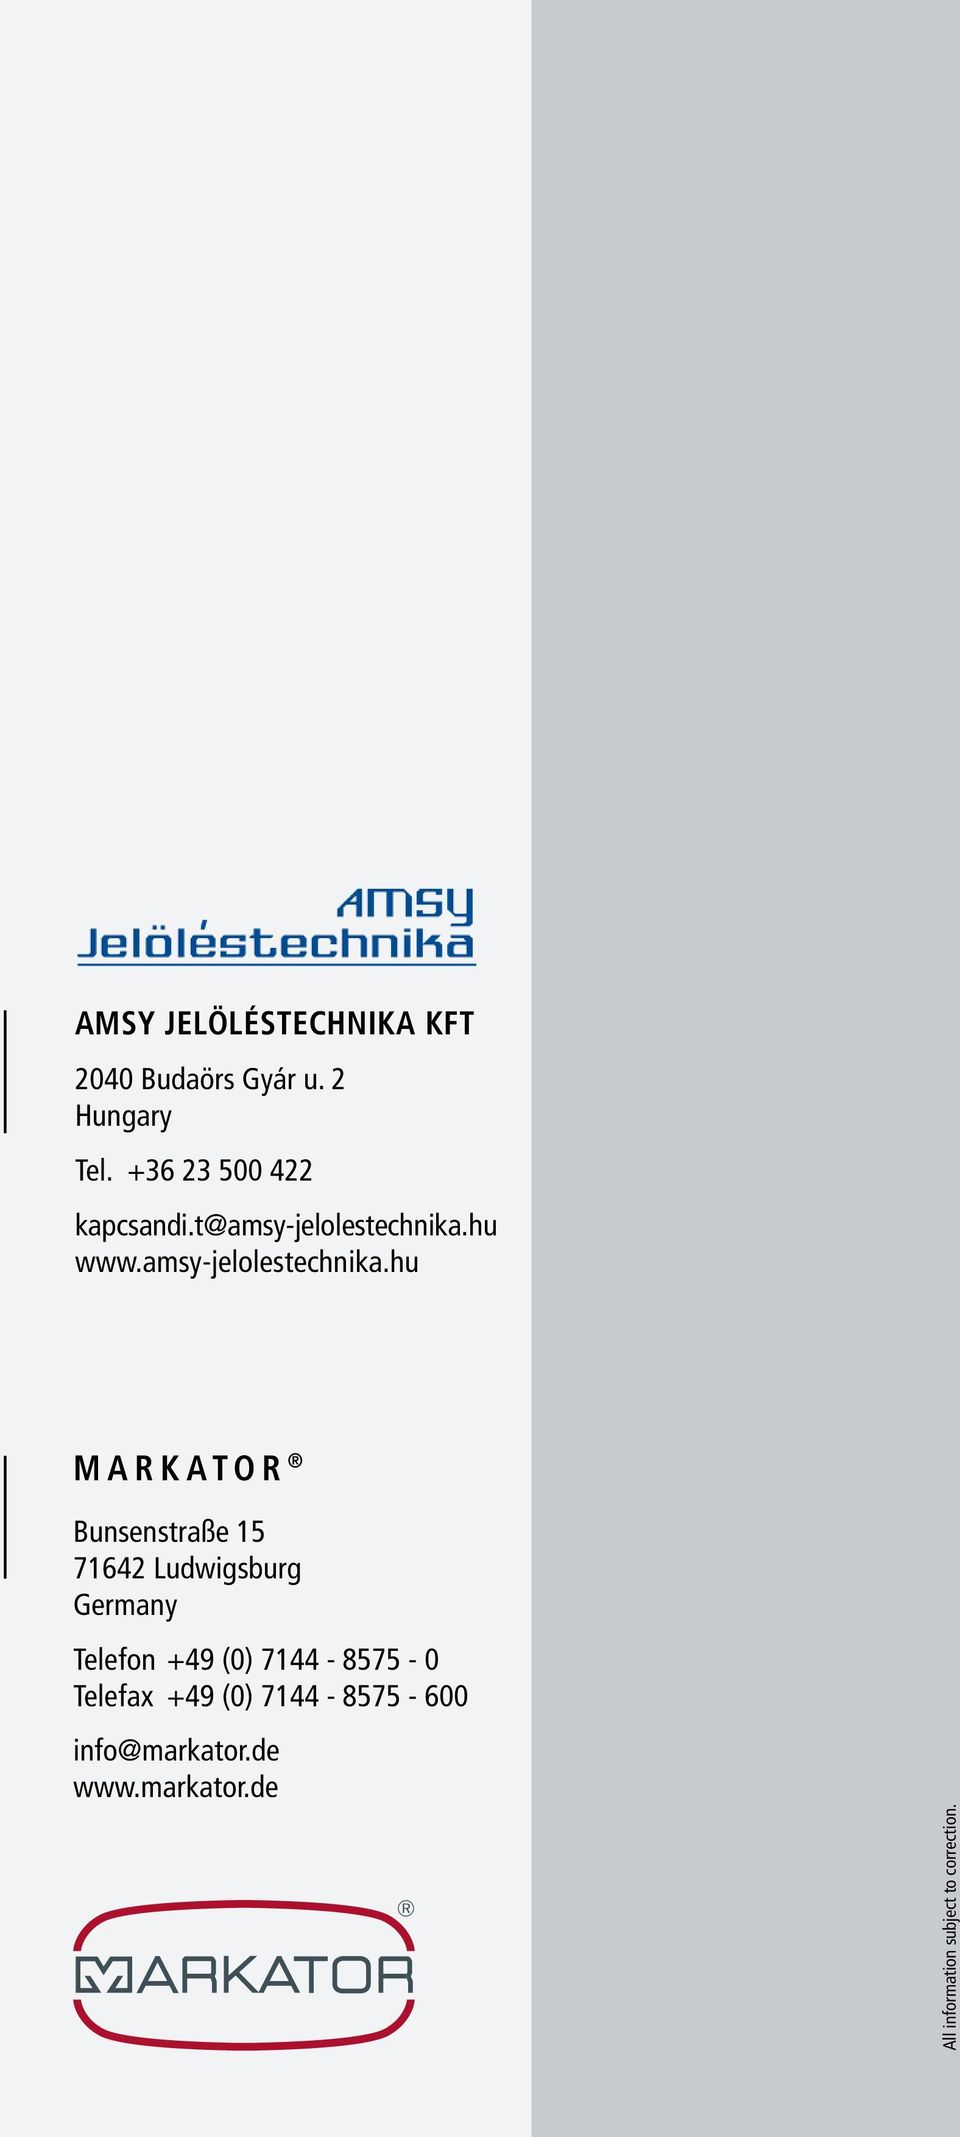 hu www.amsy-jelolestechnika.